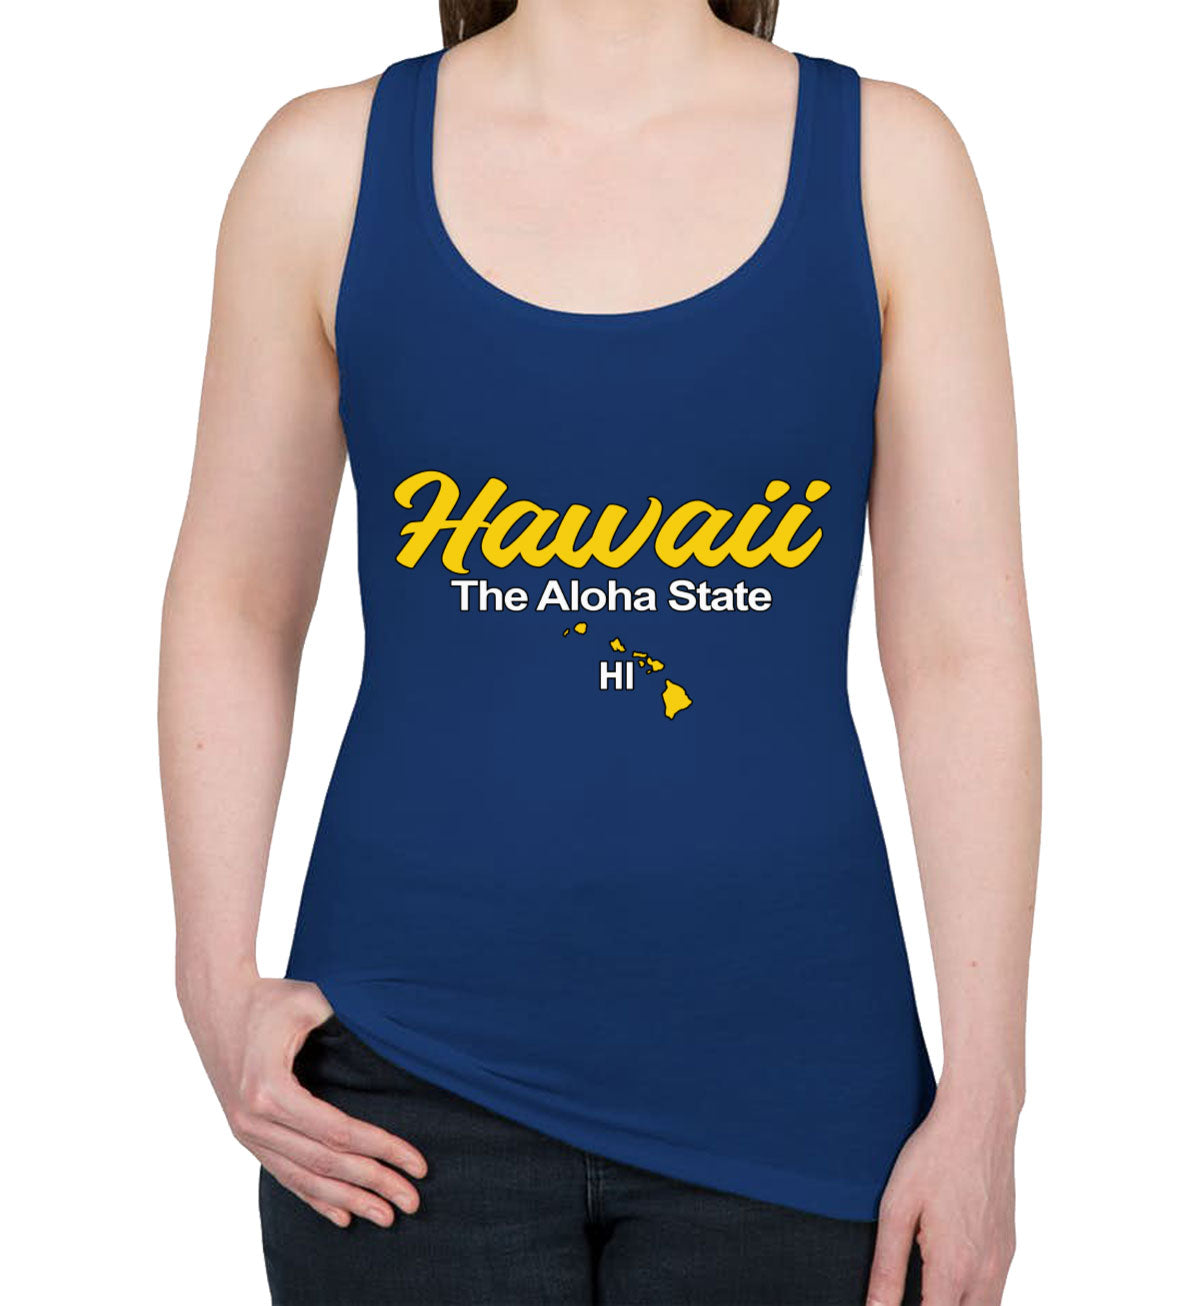 Hawaii The Aloha State Women's Racerback Tank Top